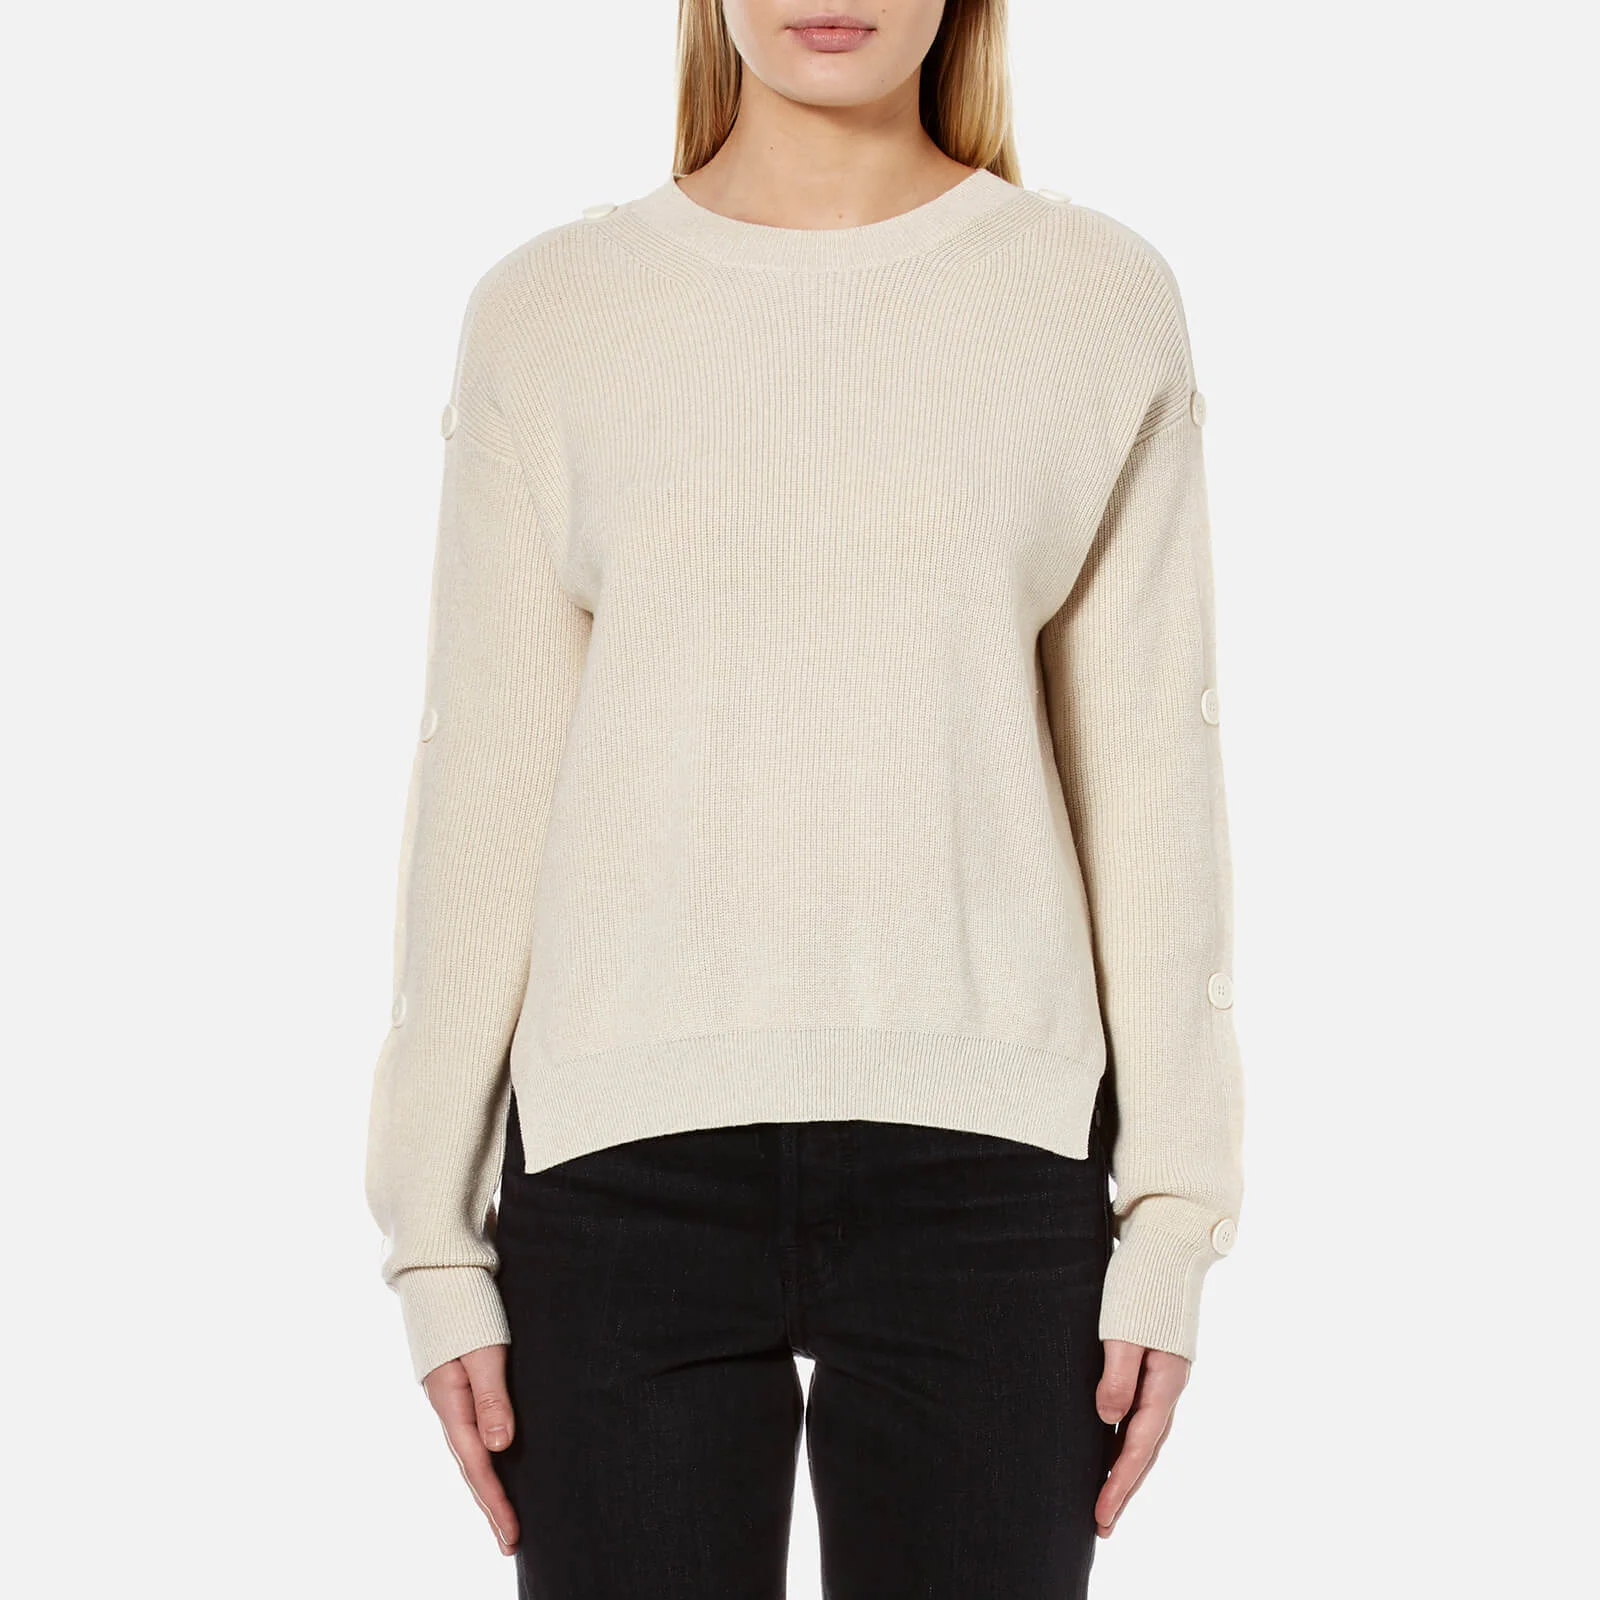 Helmut Lang Women's Button Sweater - Alabaster Image 1